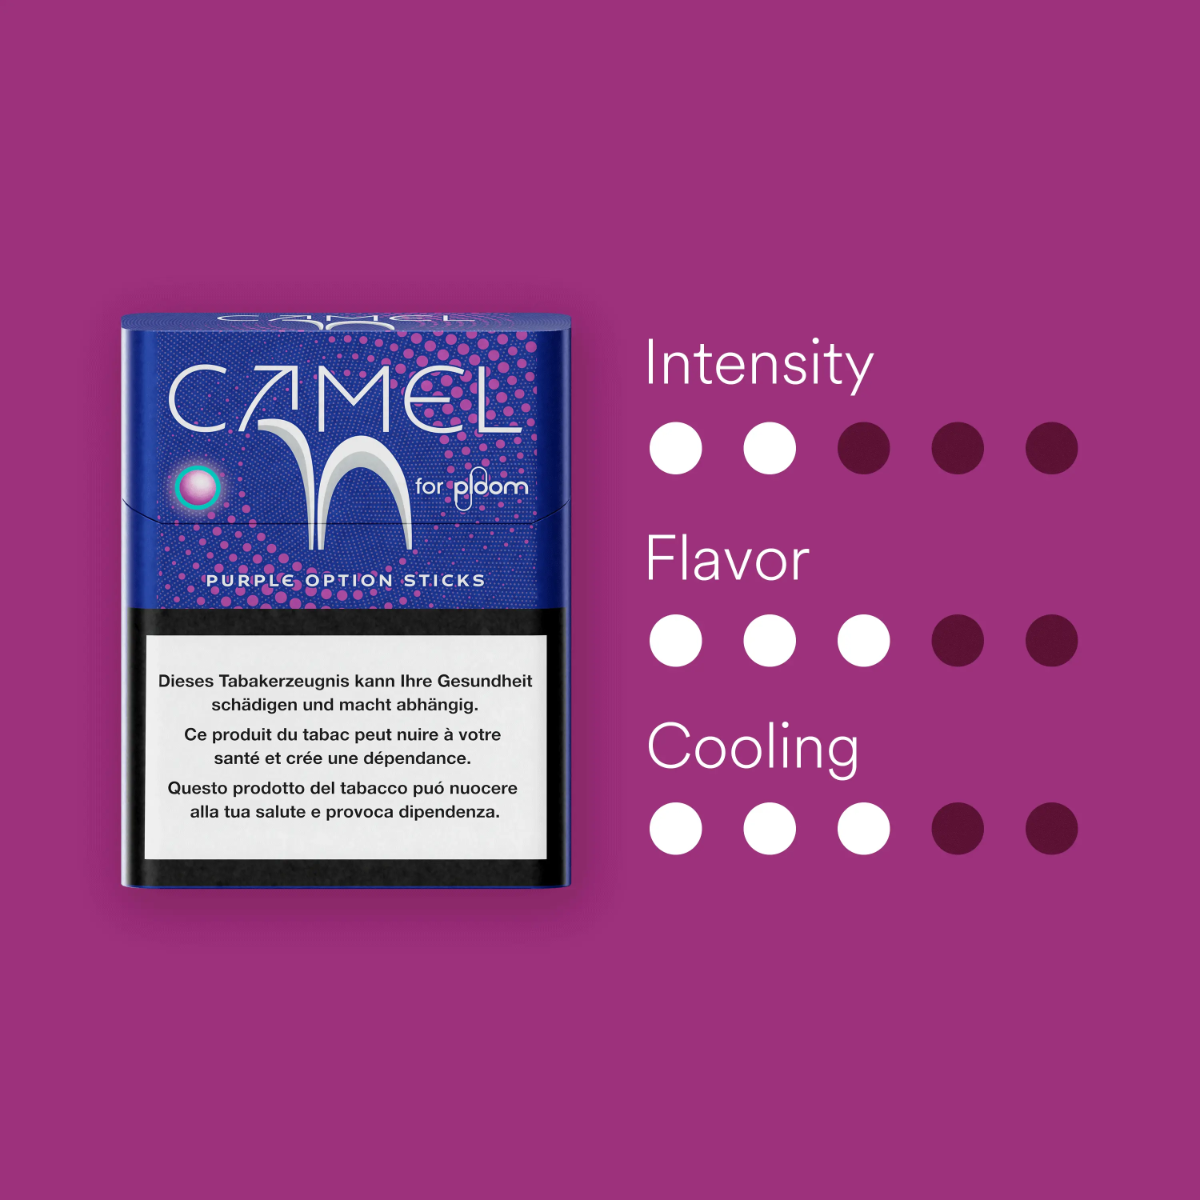 Camel Purple Option sticks for Ploom attributes
